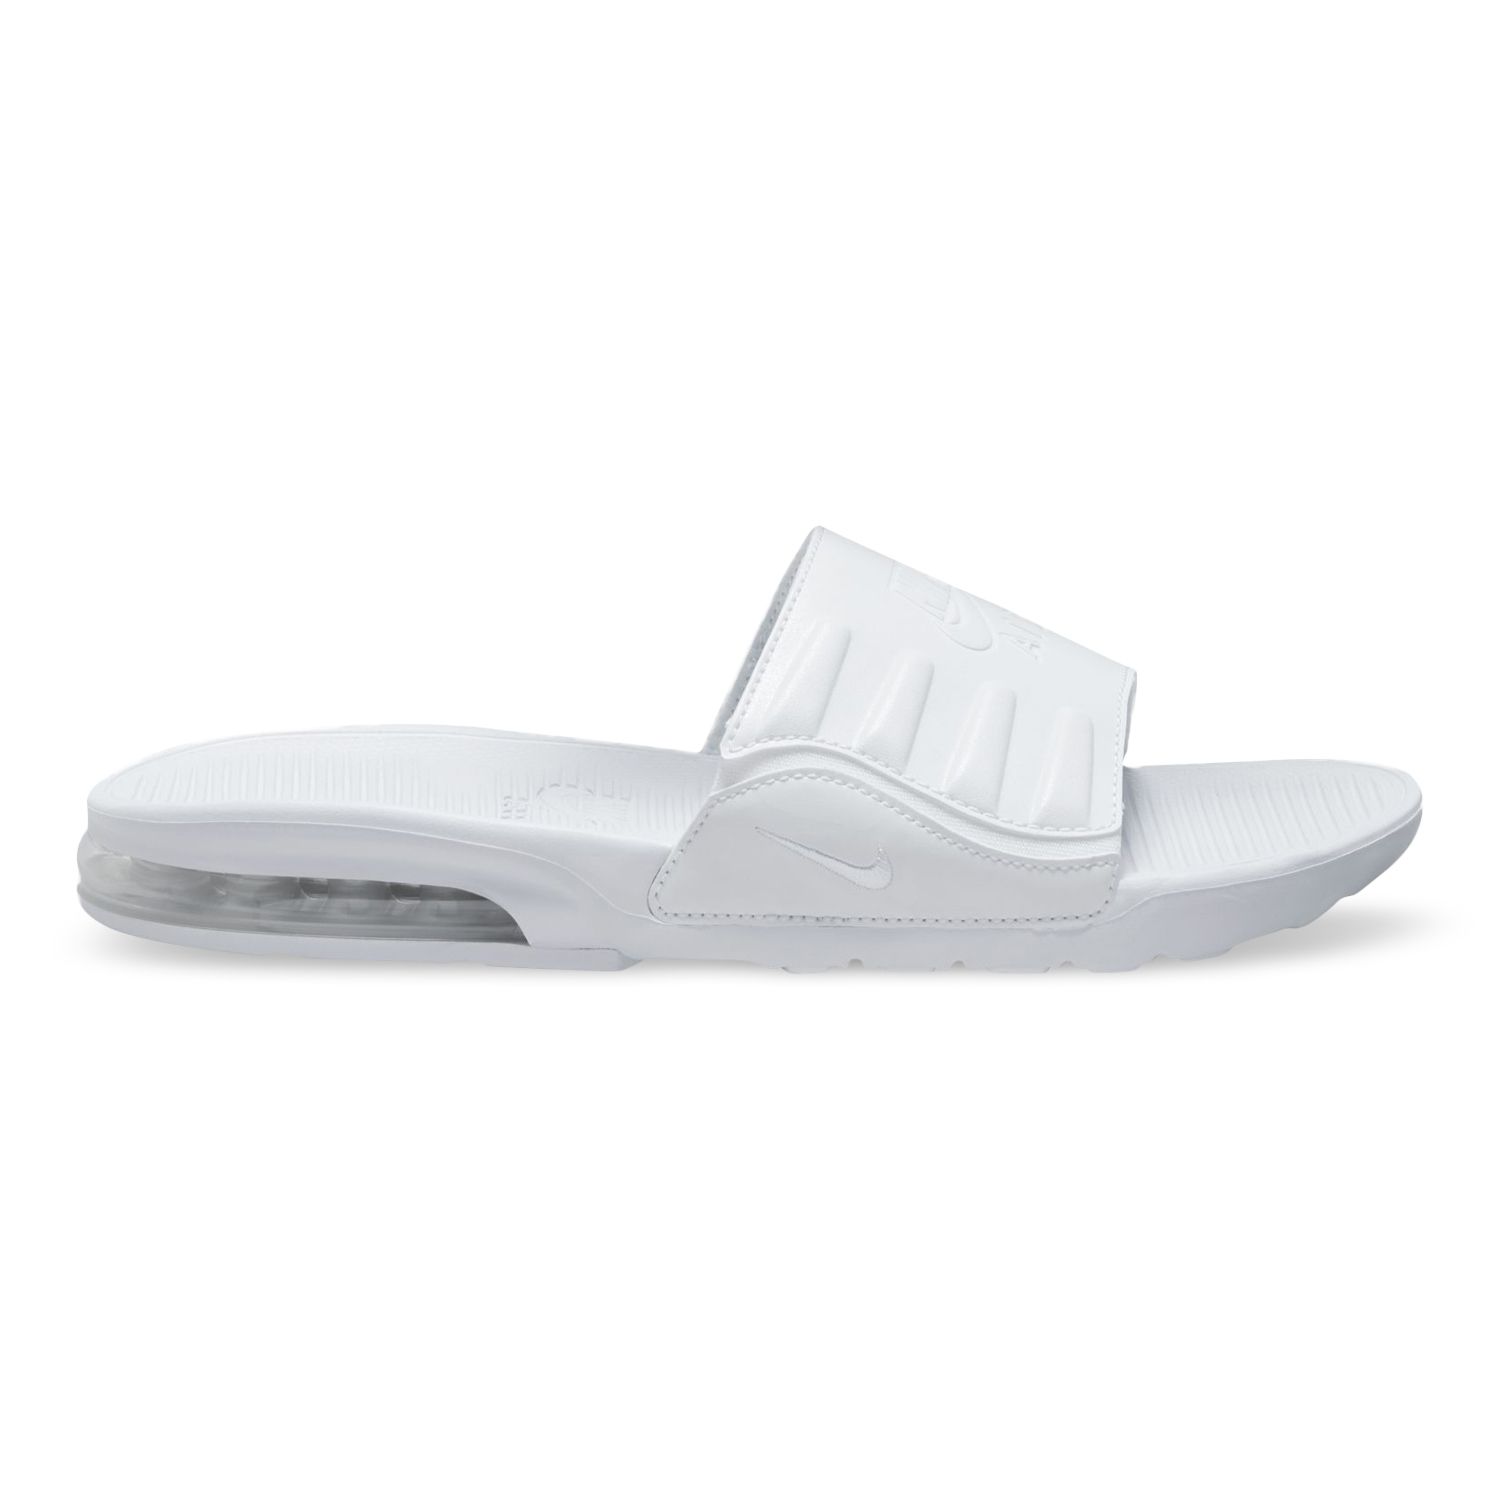 men's nike air max camden slide sandals